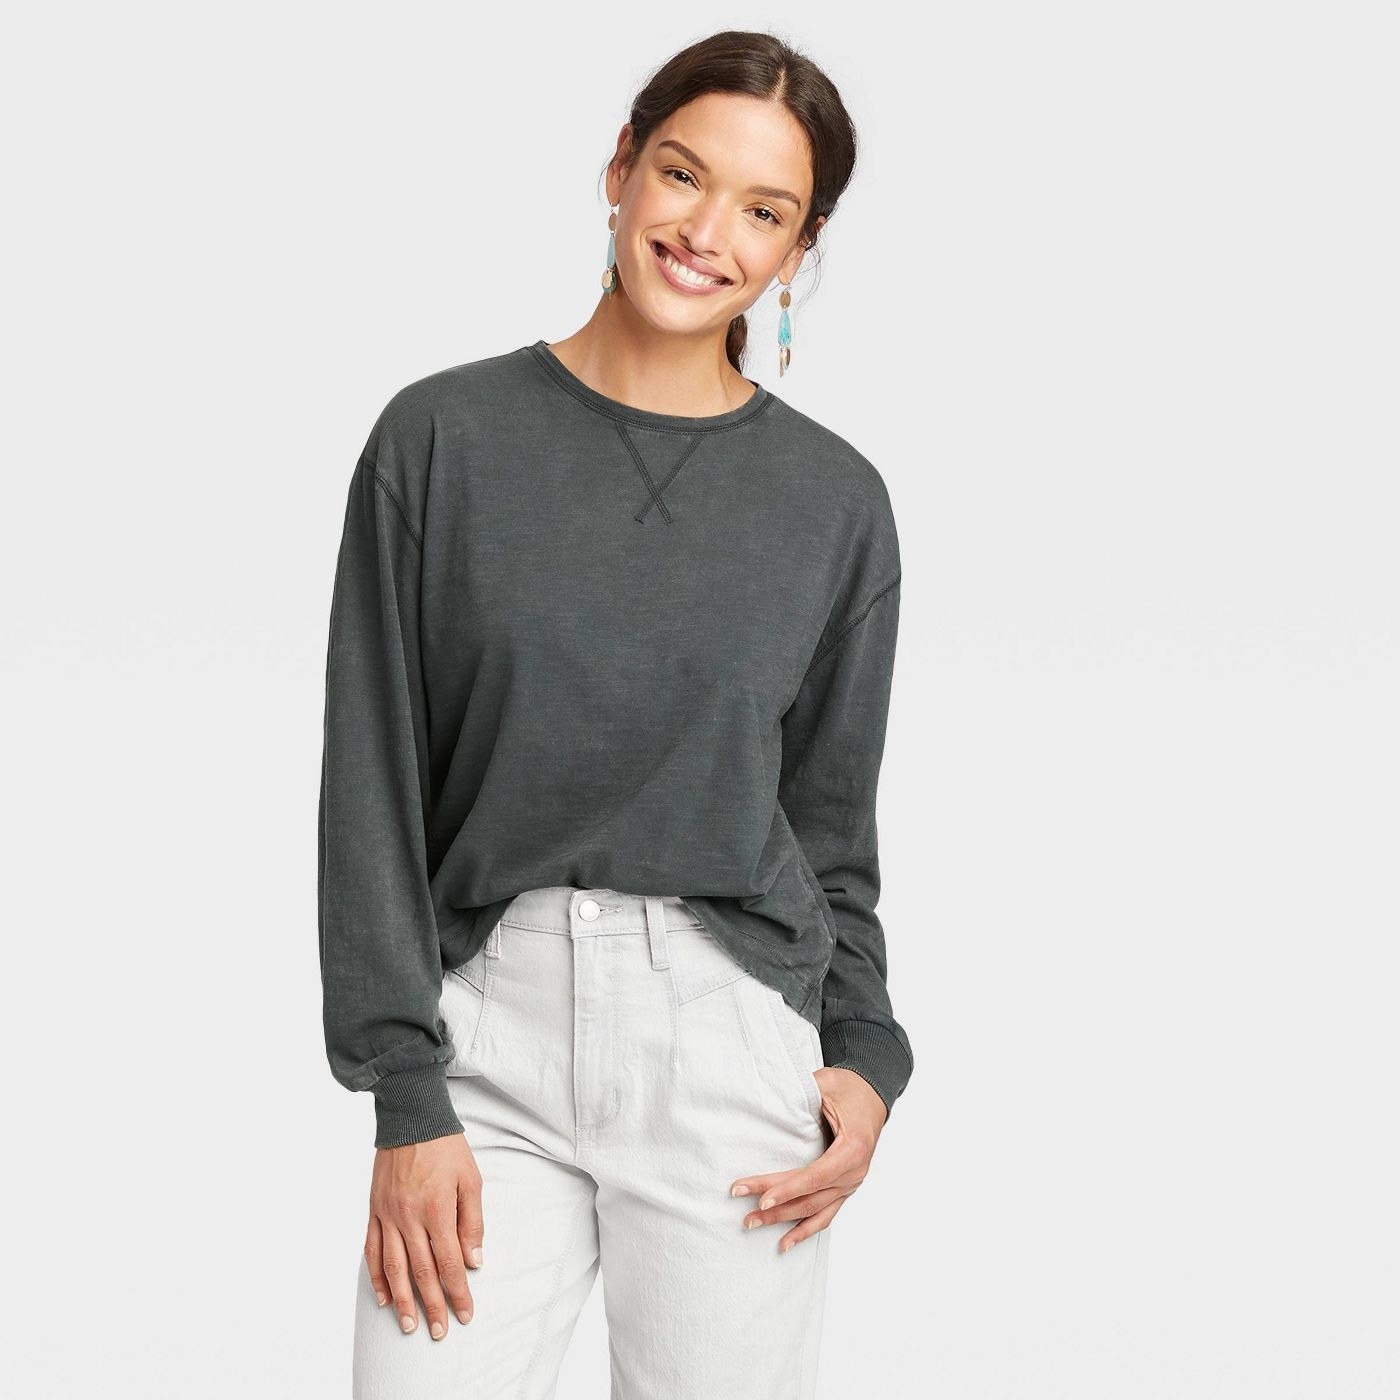 Model wearing the dark gray long-sleeve boxy crewneck t-shirt